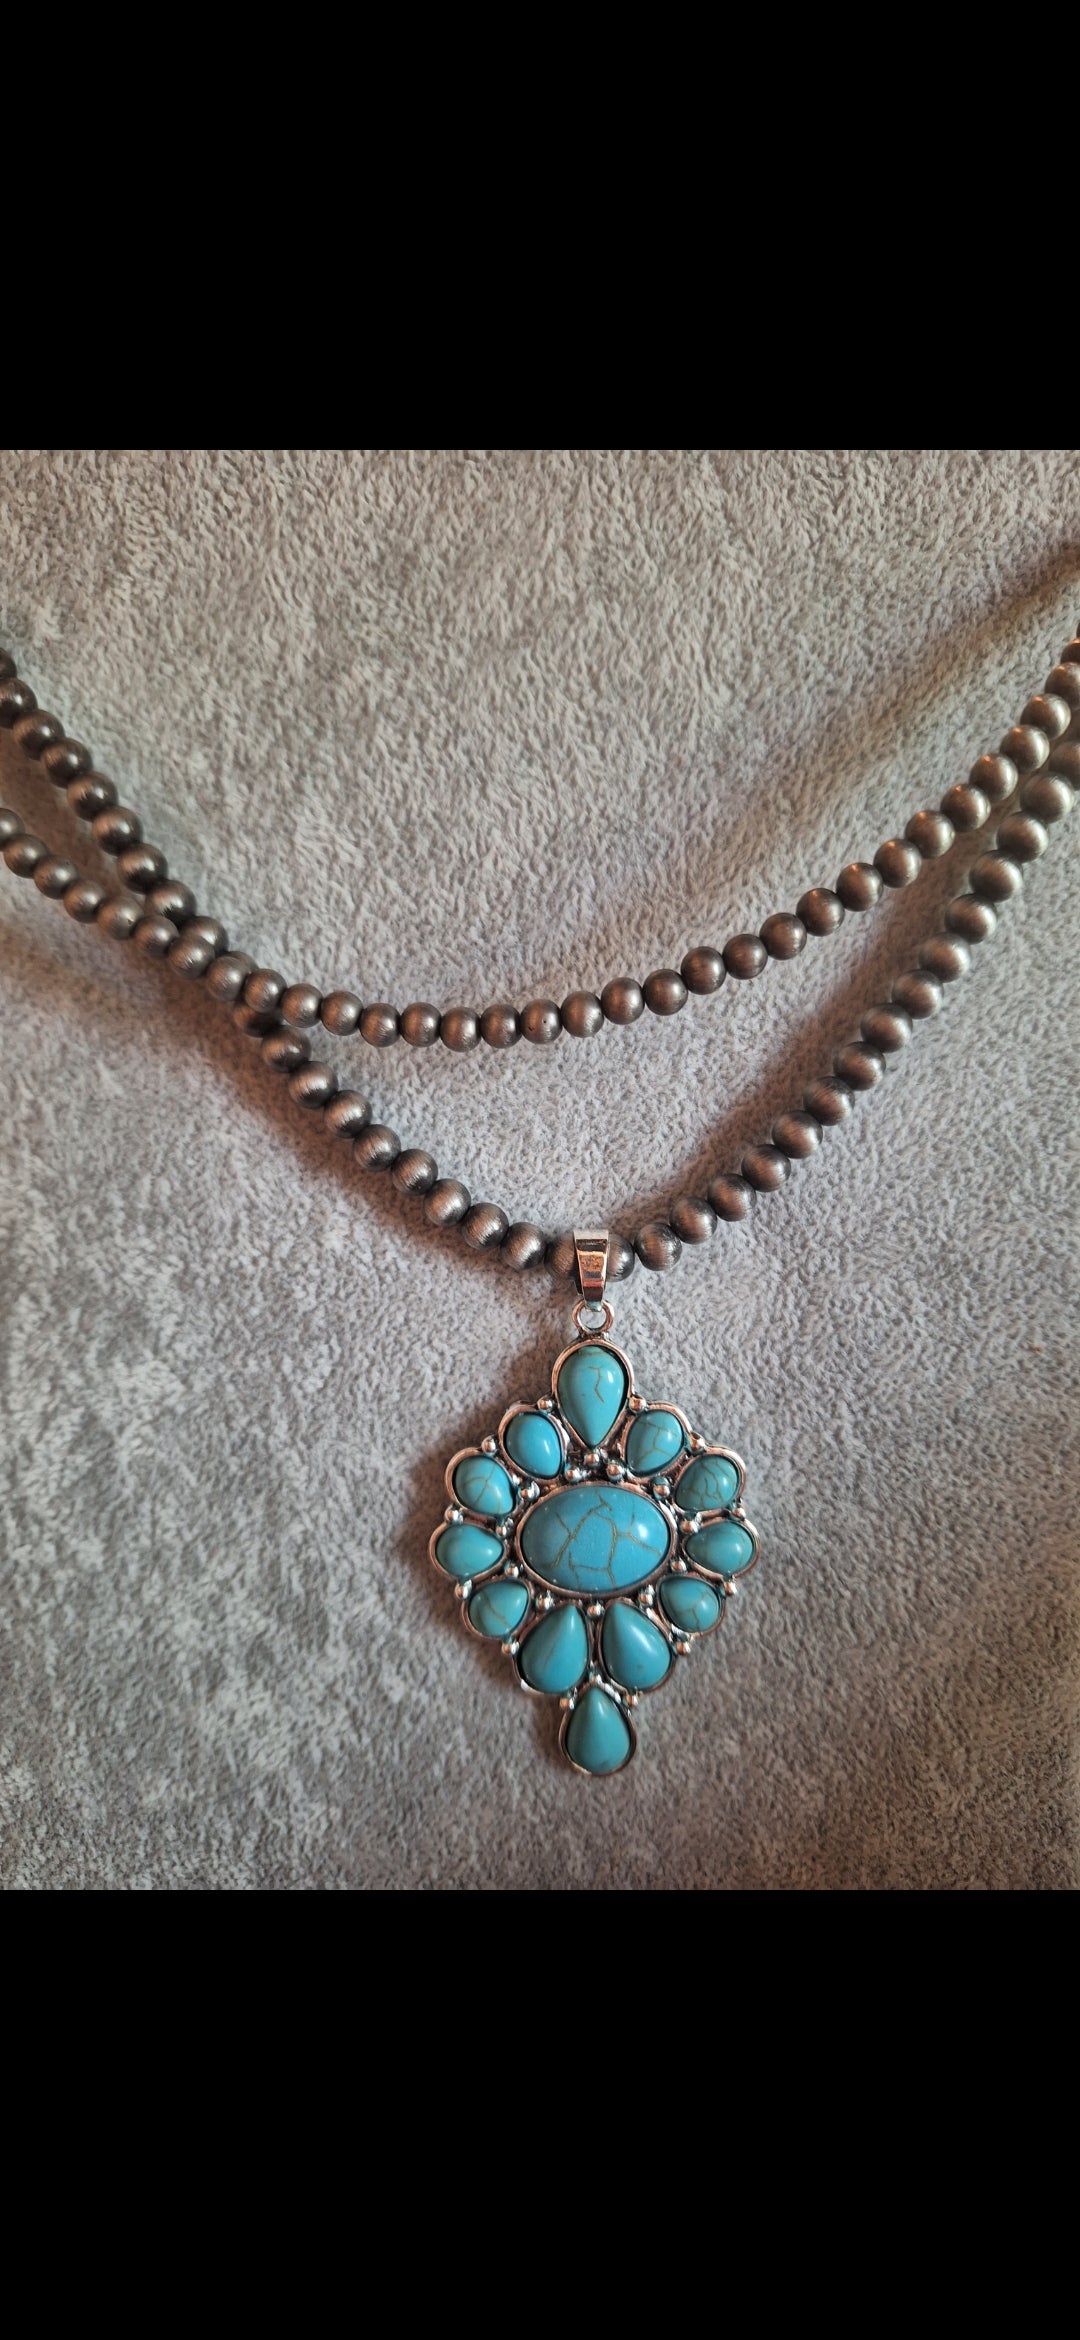 Turquoise pendant necklace